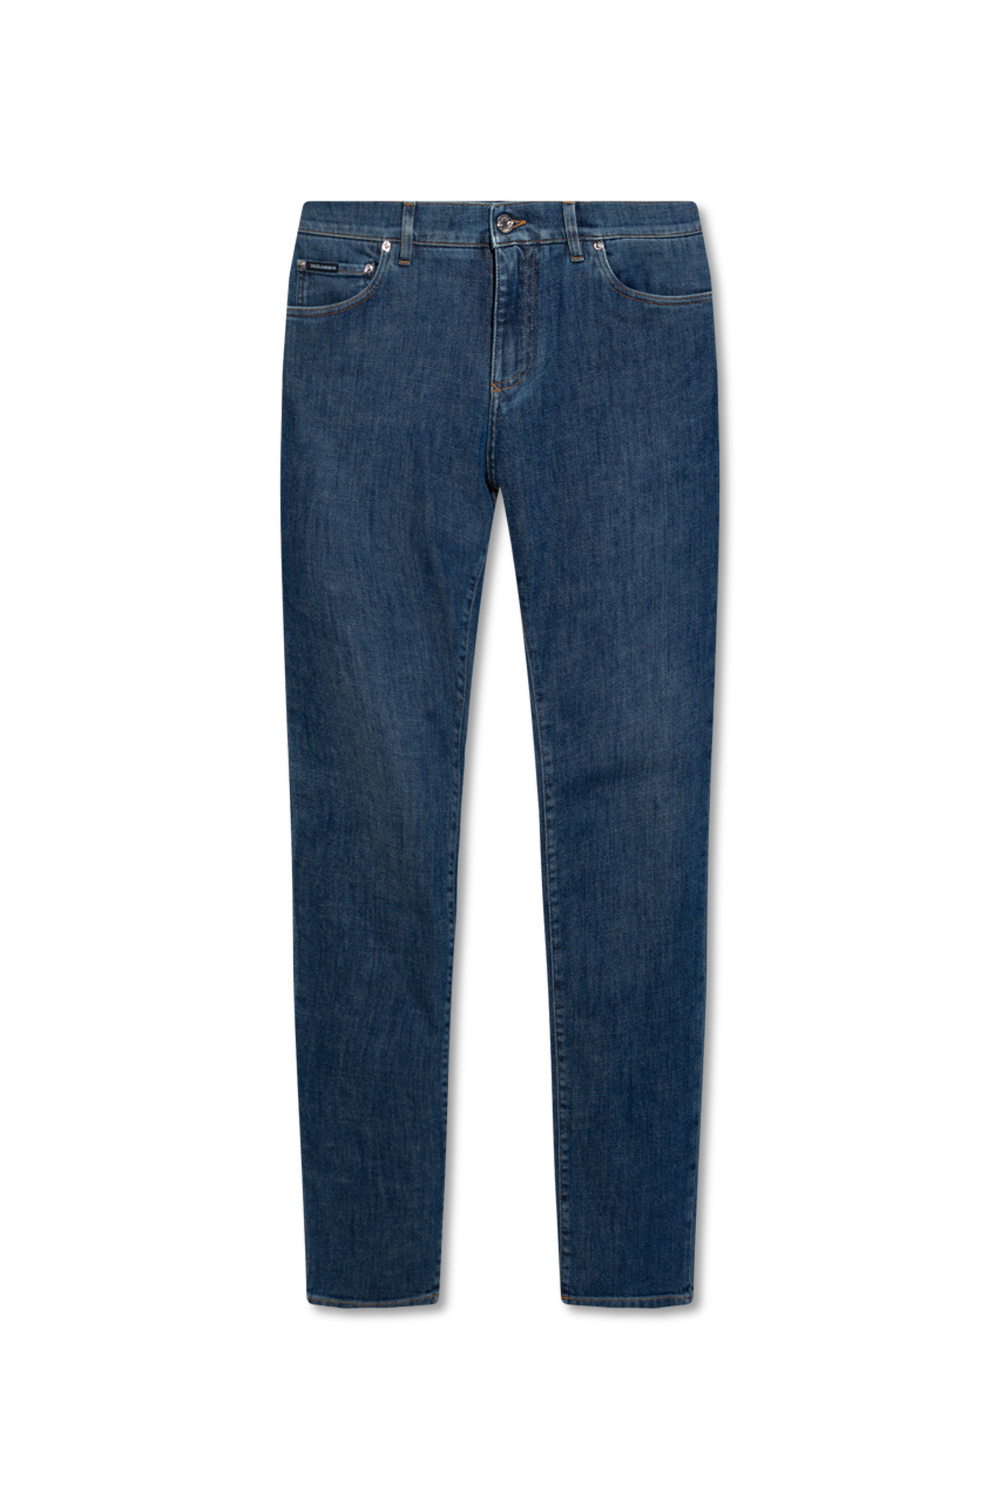 Шерстяные штаны со стрелками dolce & gabbana Skinny jeans